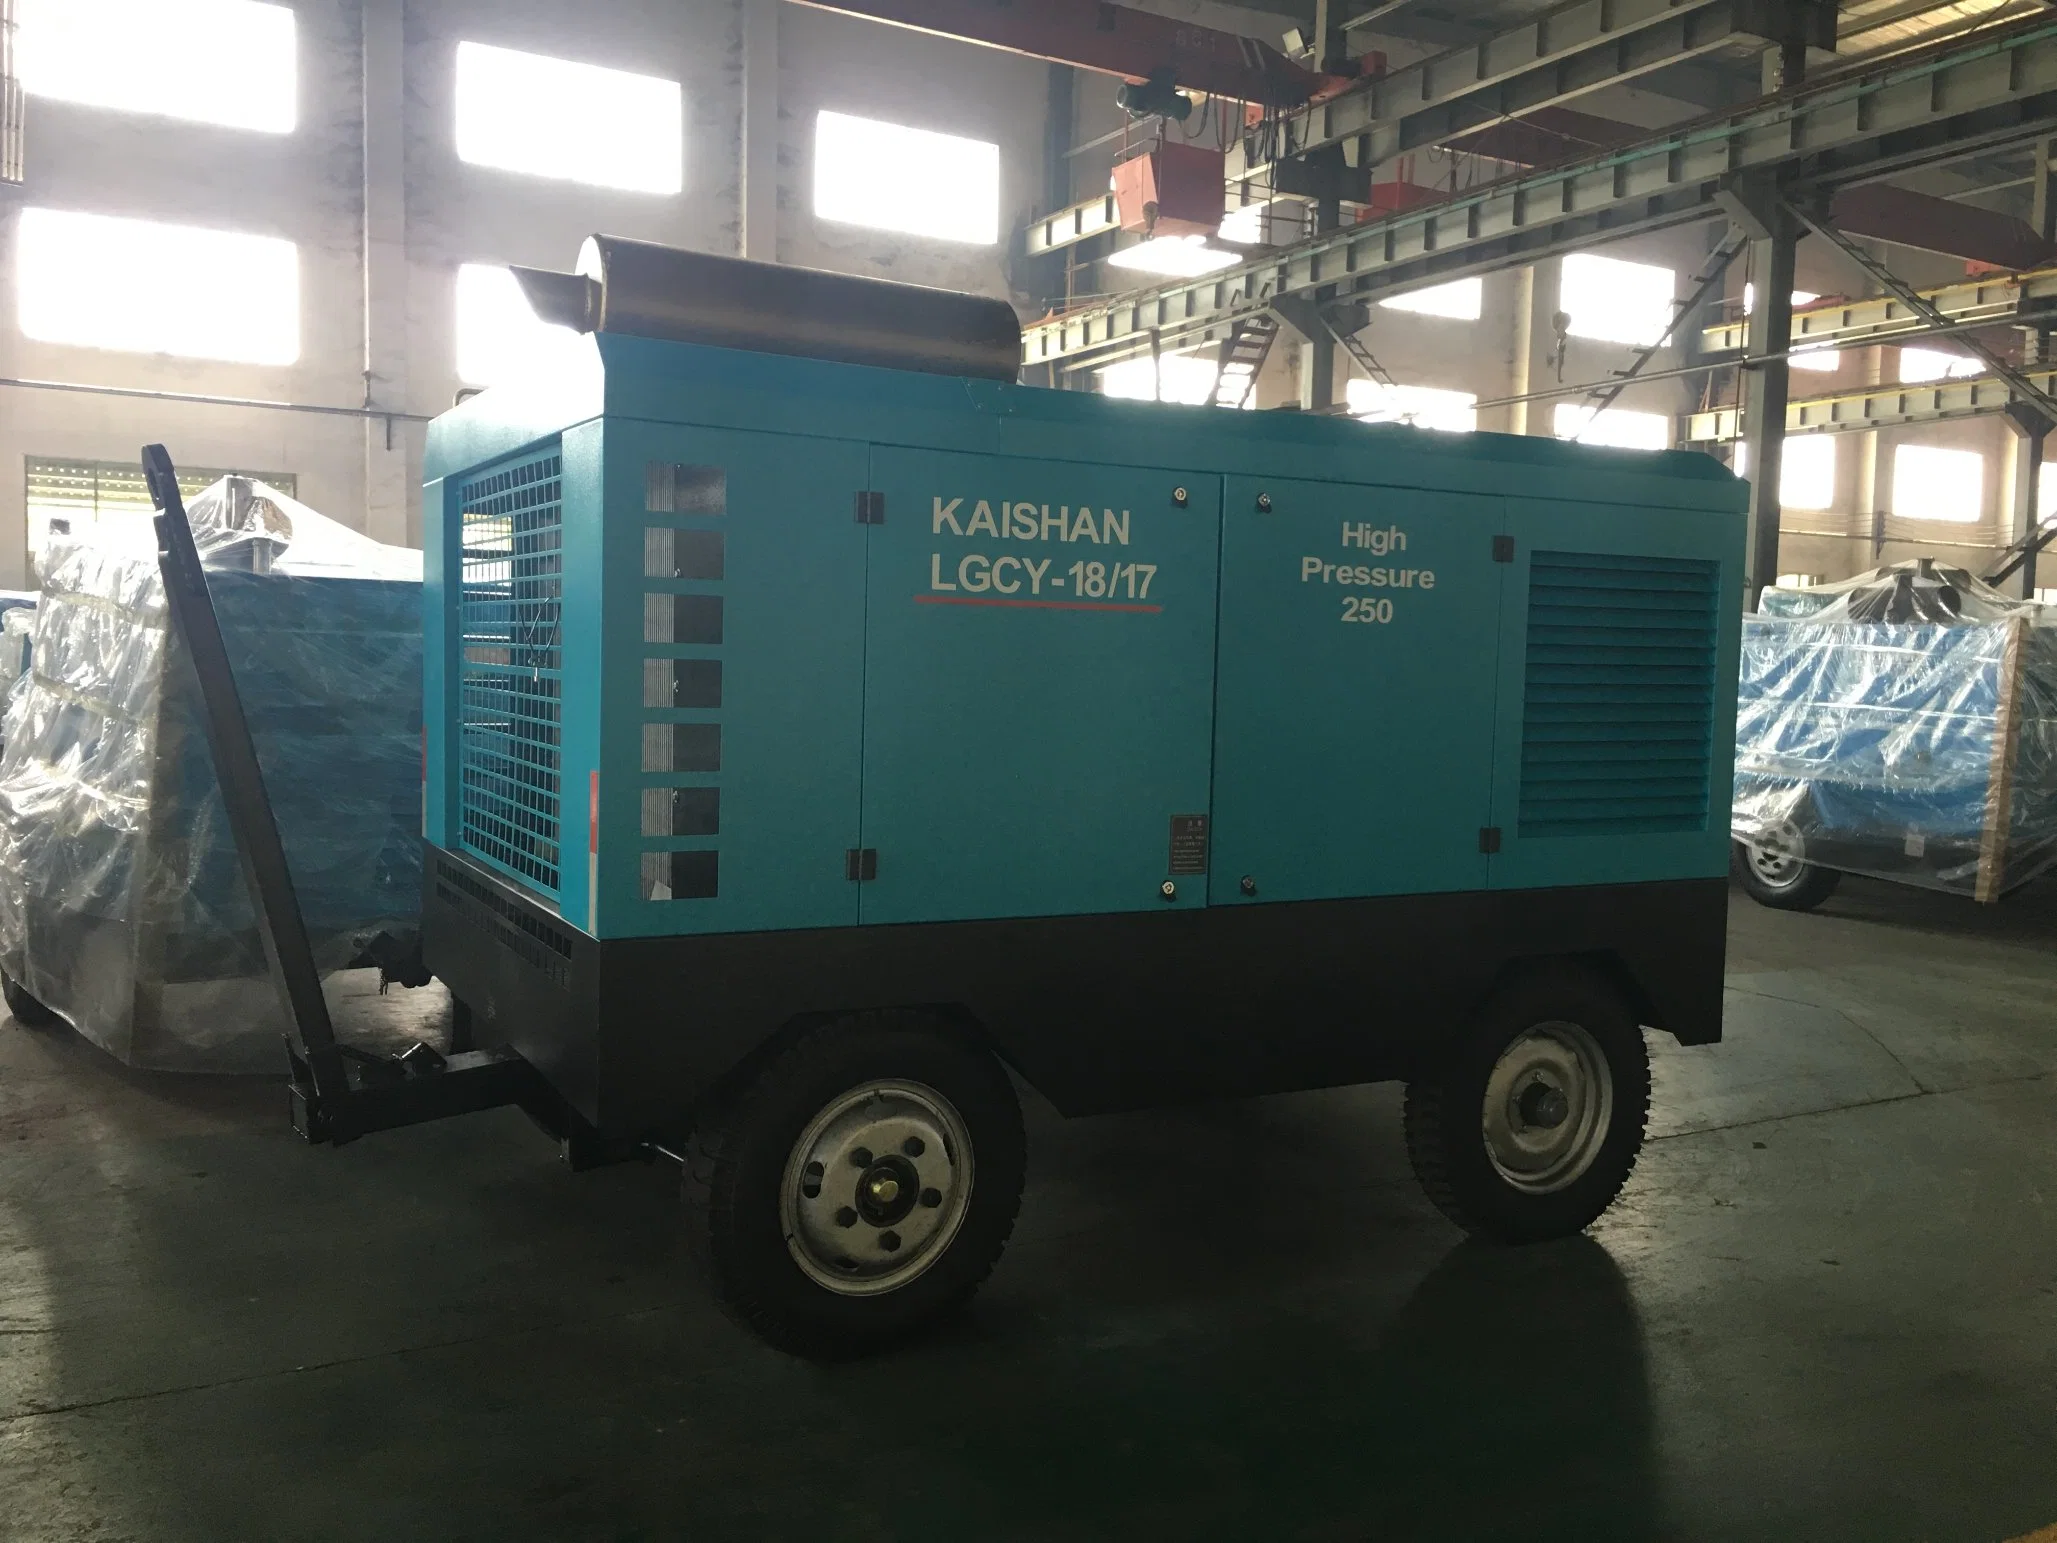 Kaishan LGCY-18/17 High Pressure Diesel Screw Air Compressor